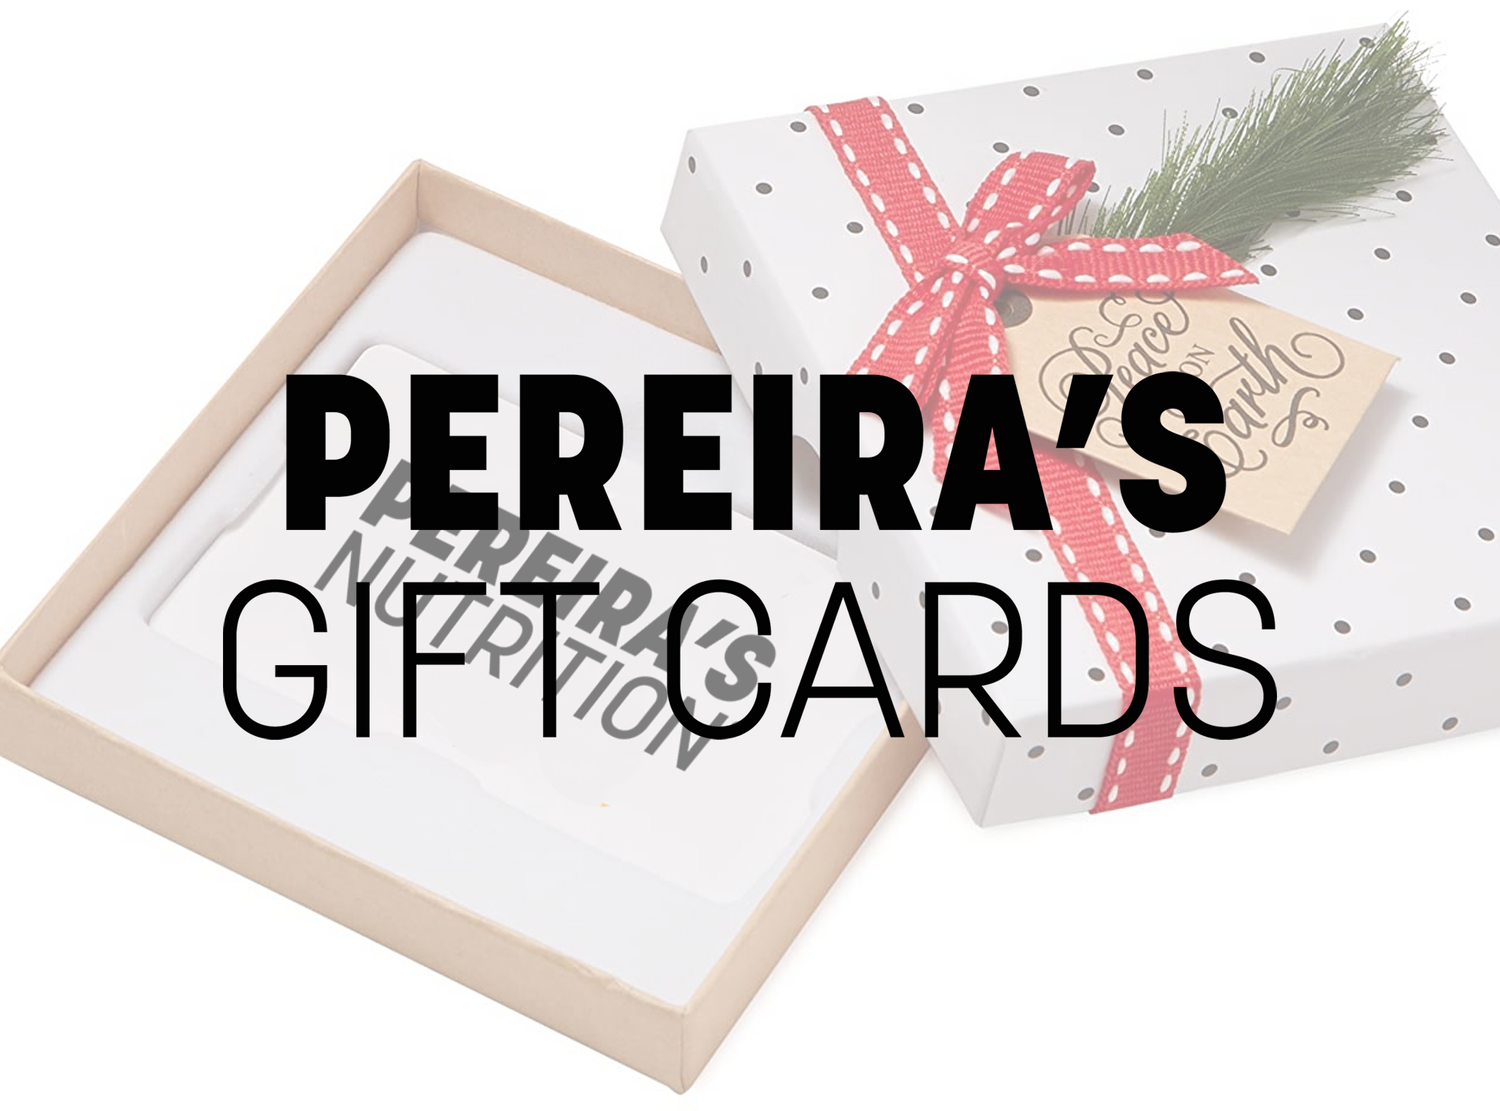 Pereira's Gift Cards